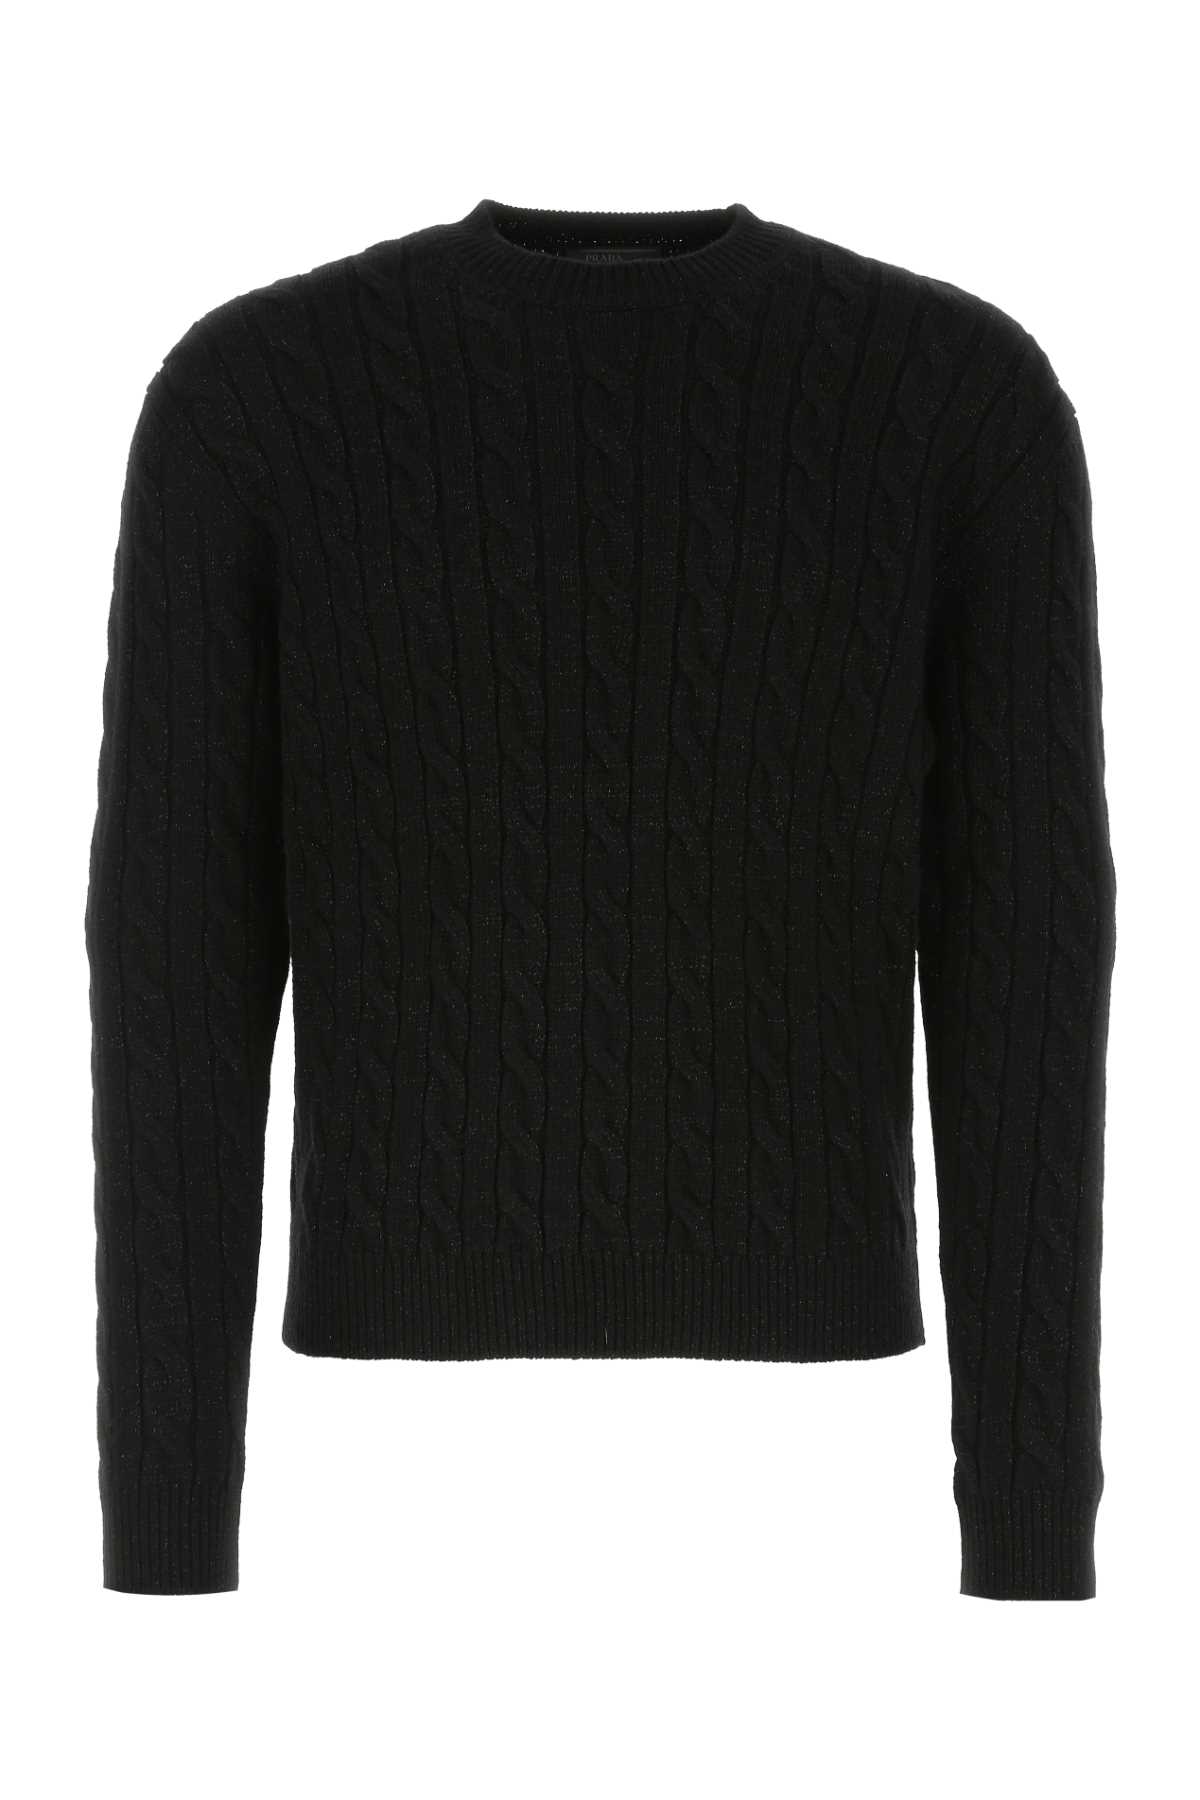 Shop Prada Black Wool Blend Sweater